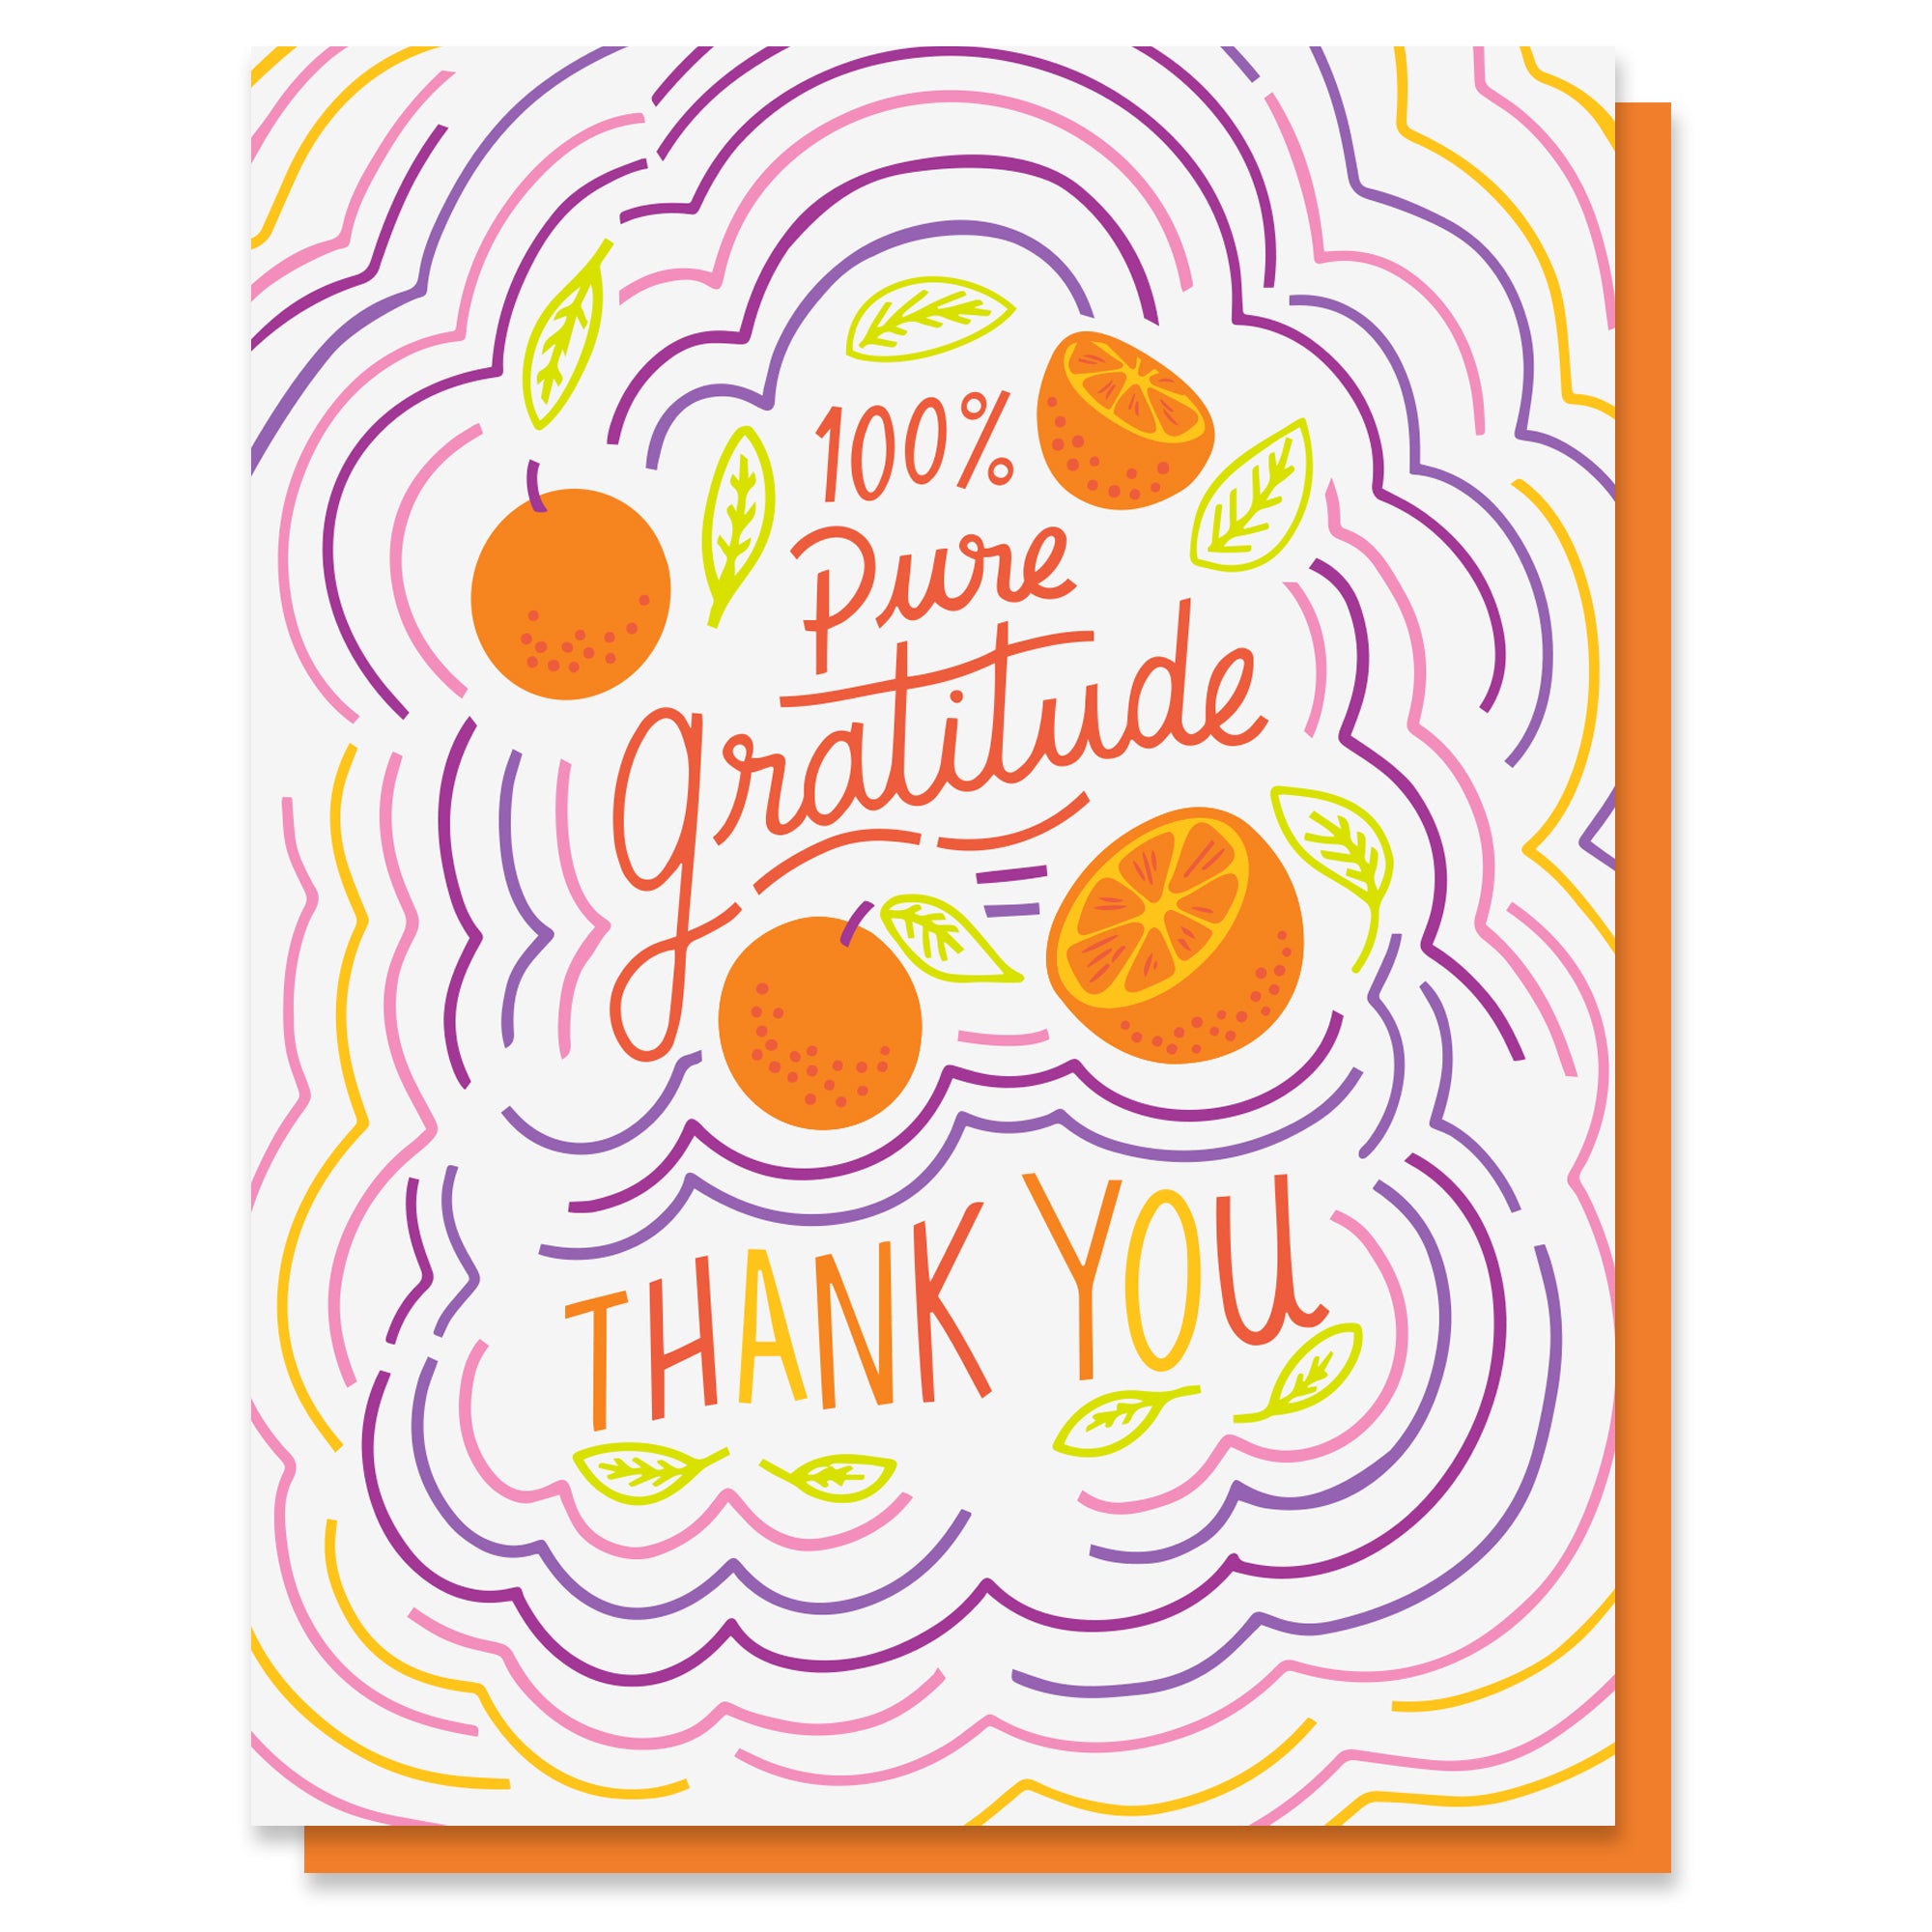 Pure Gratitude Thank You Card